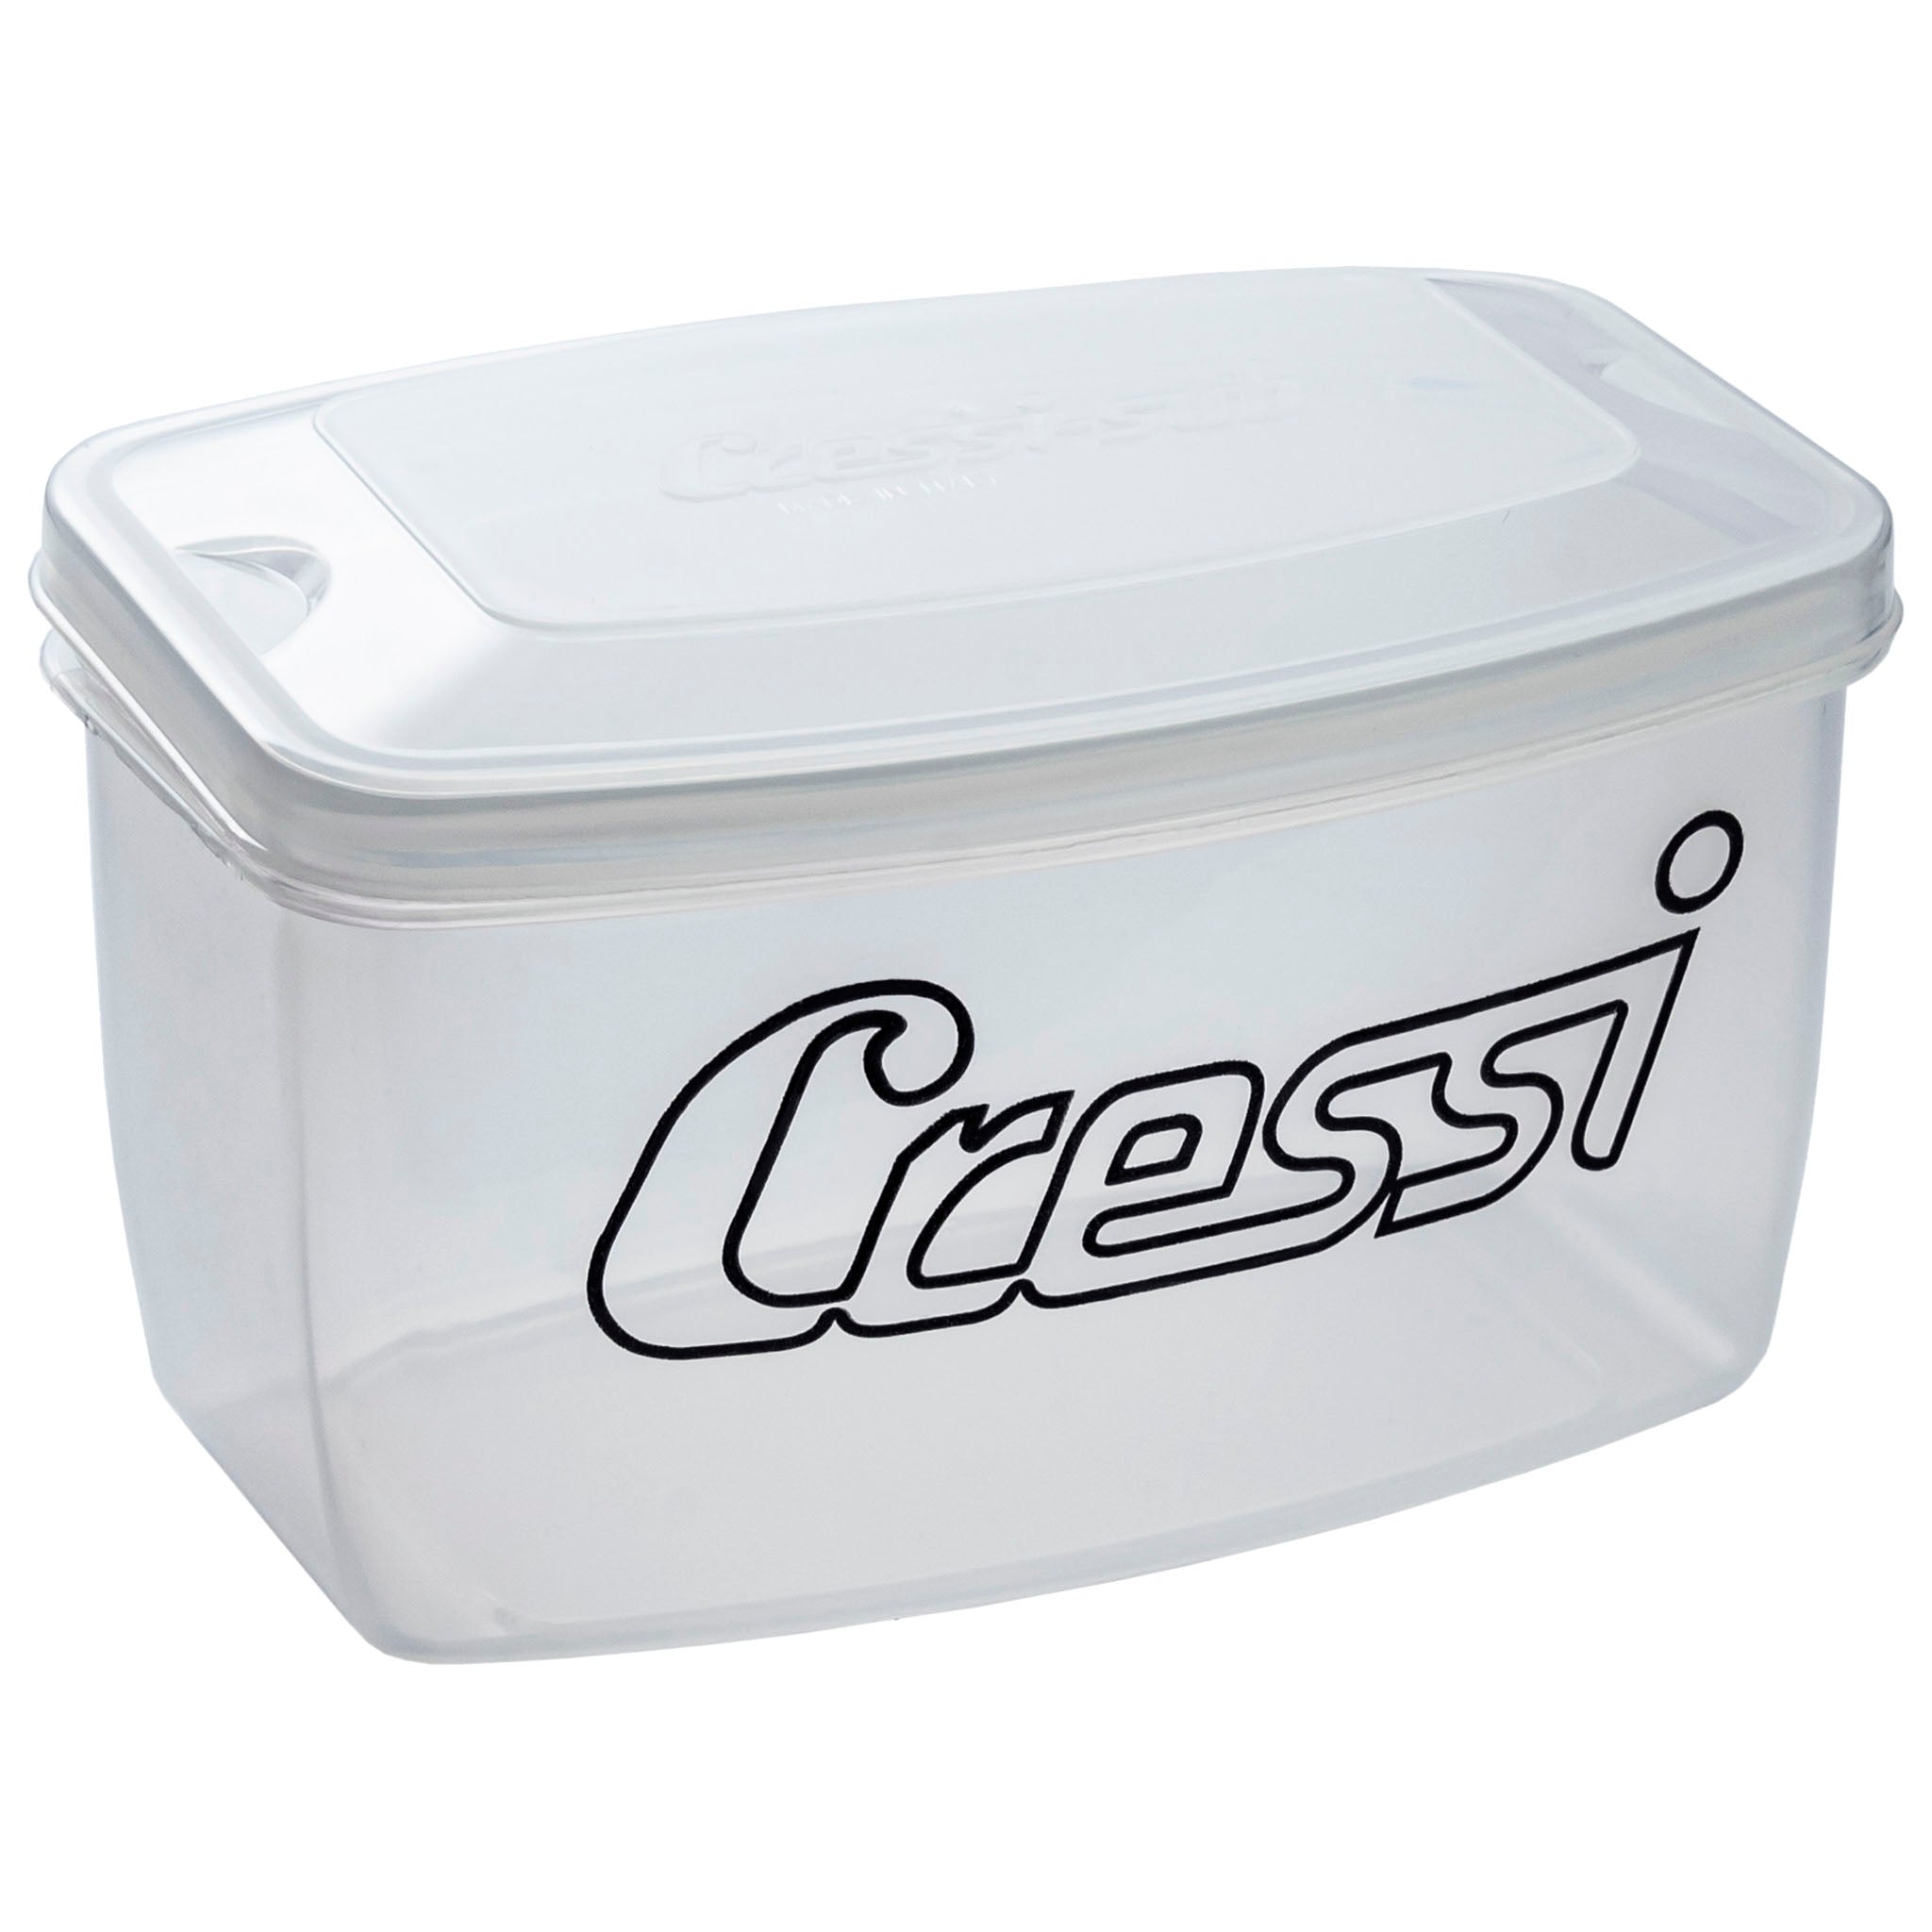 Cressi Dive Mask Box Large